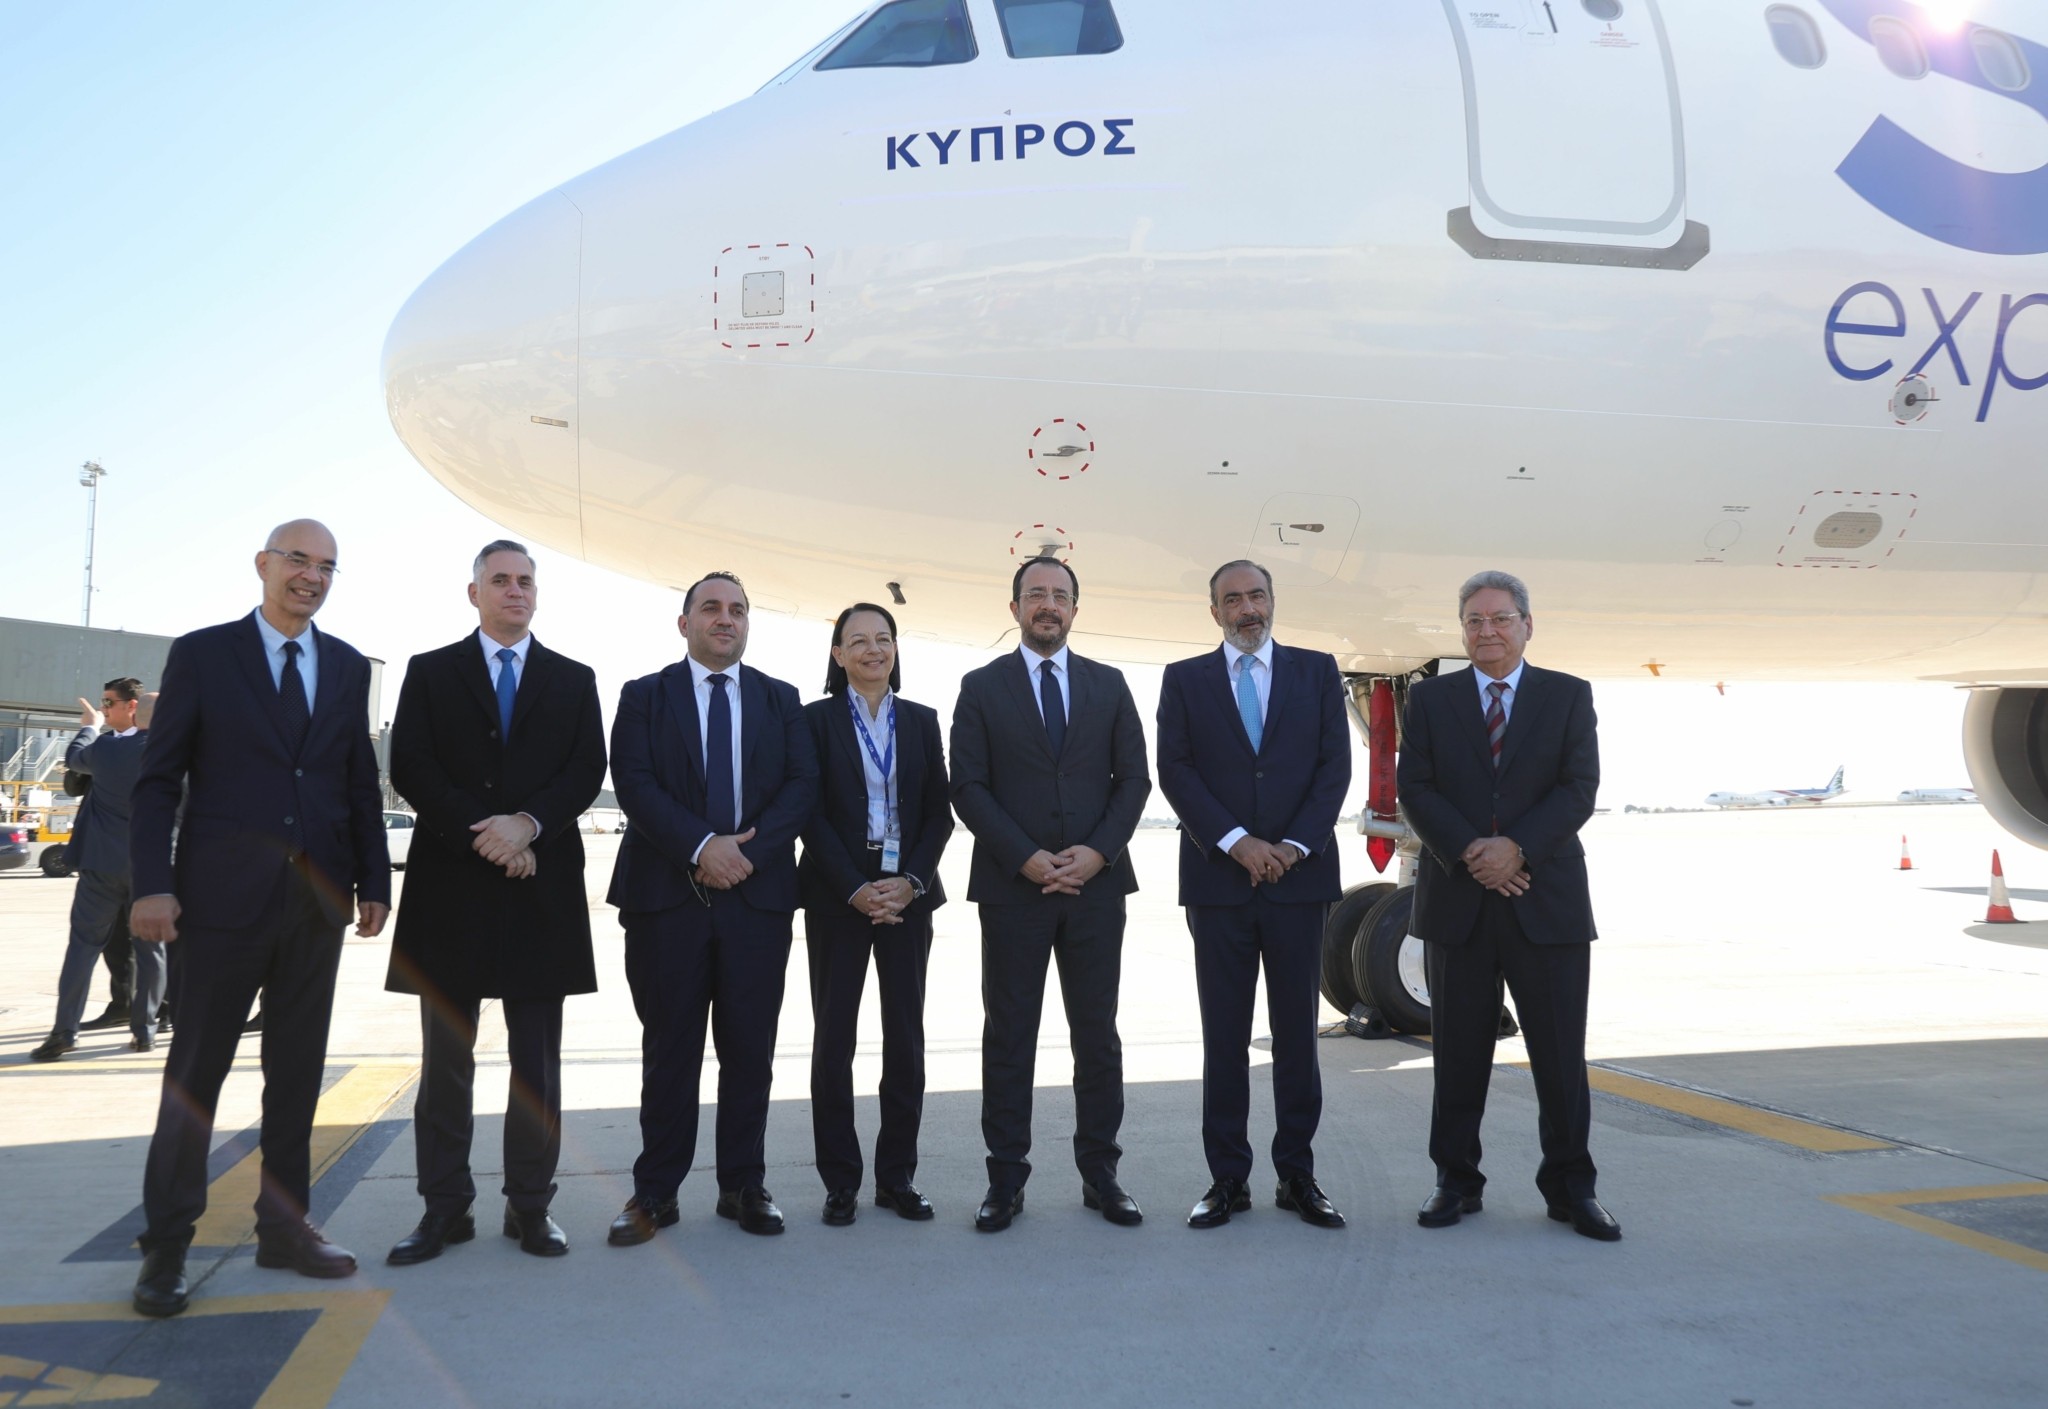 SKY express: «ΚΥΠΡΟΣ» το όνομα στο πρώτο της αεροσκάφος τύπου AIRBUS A321neo (pics)